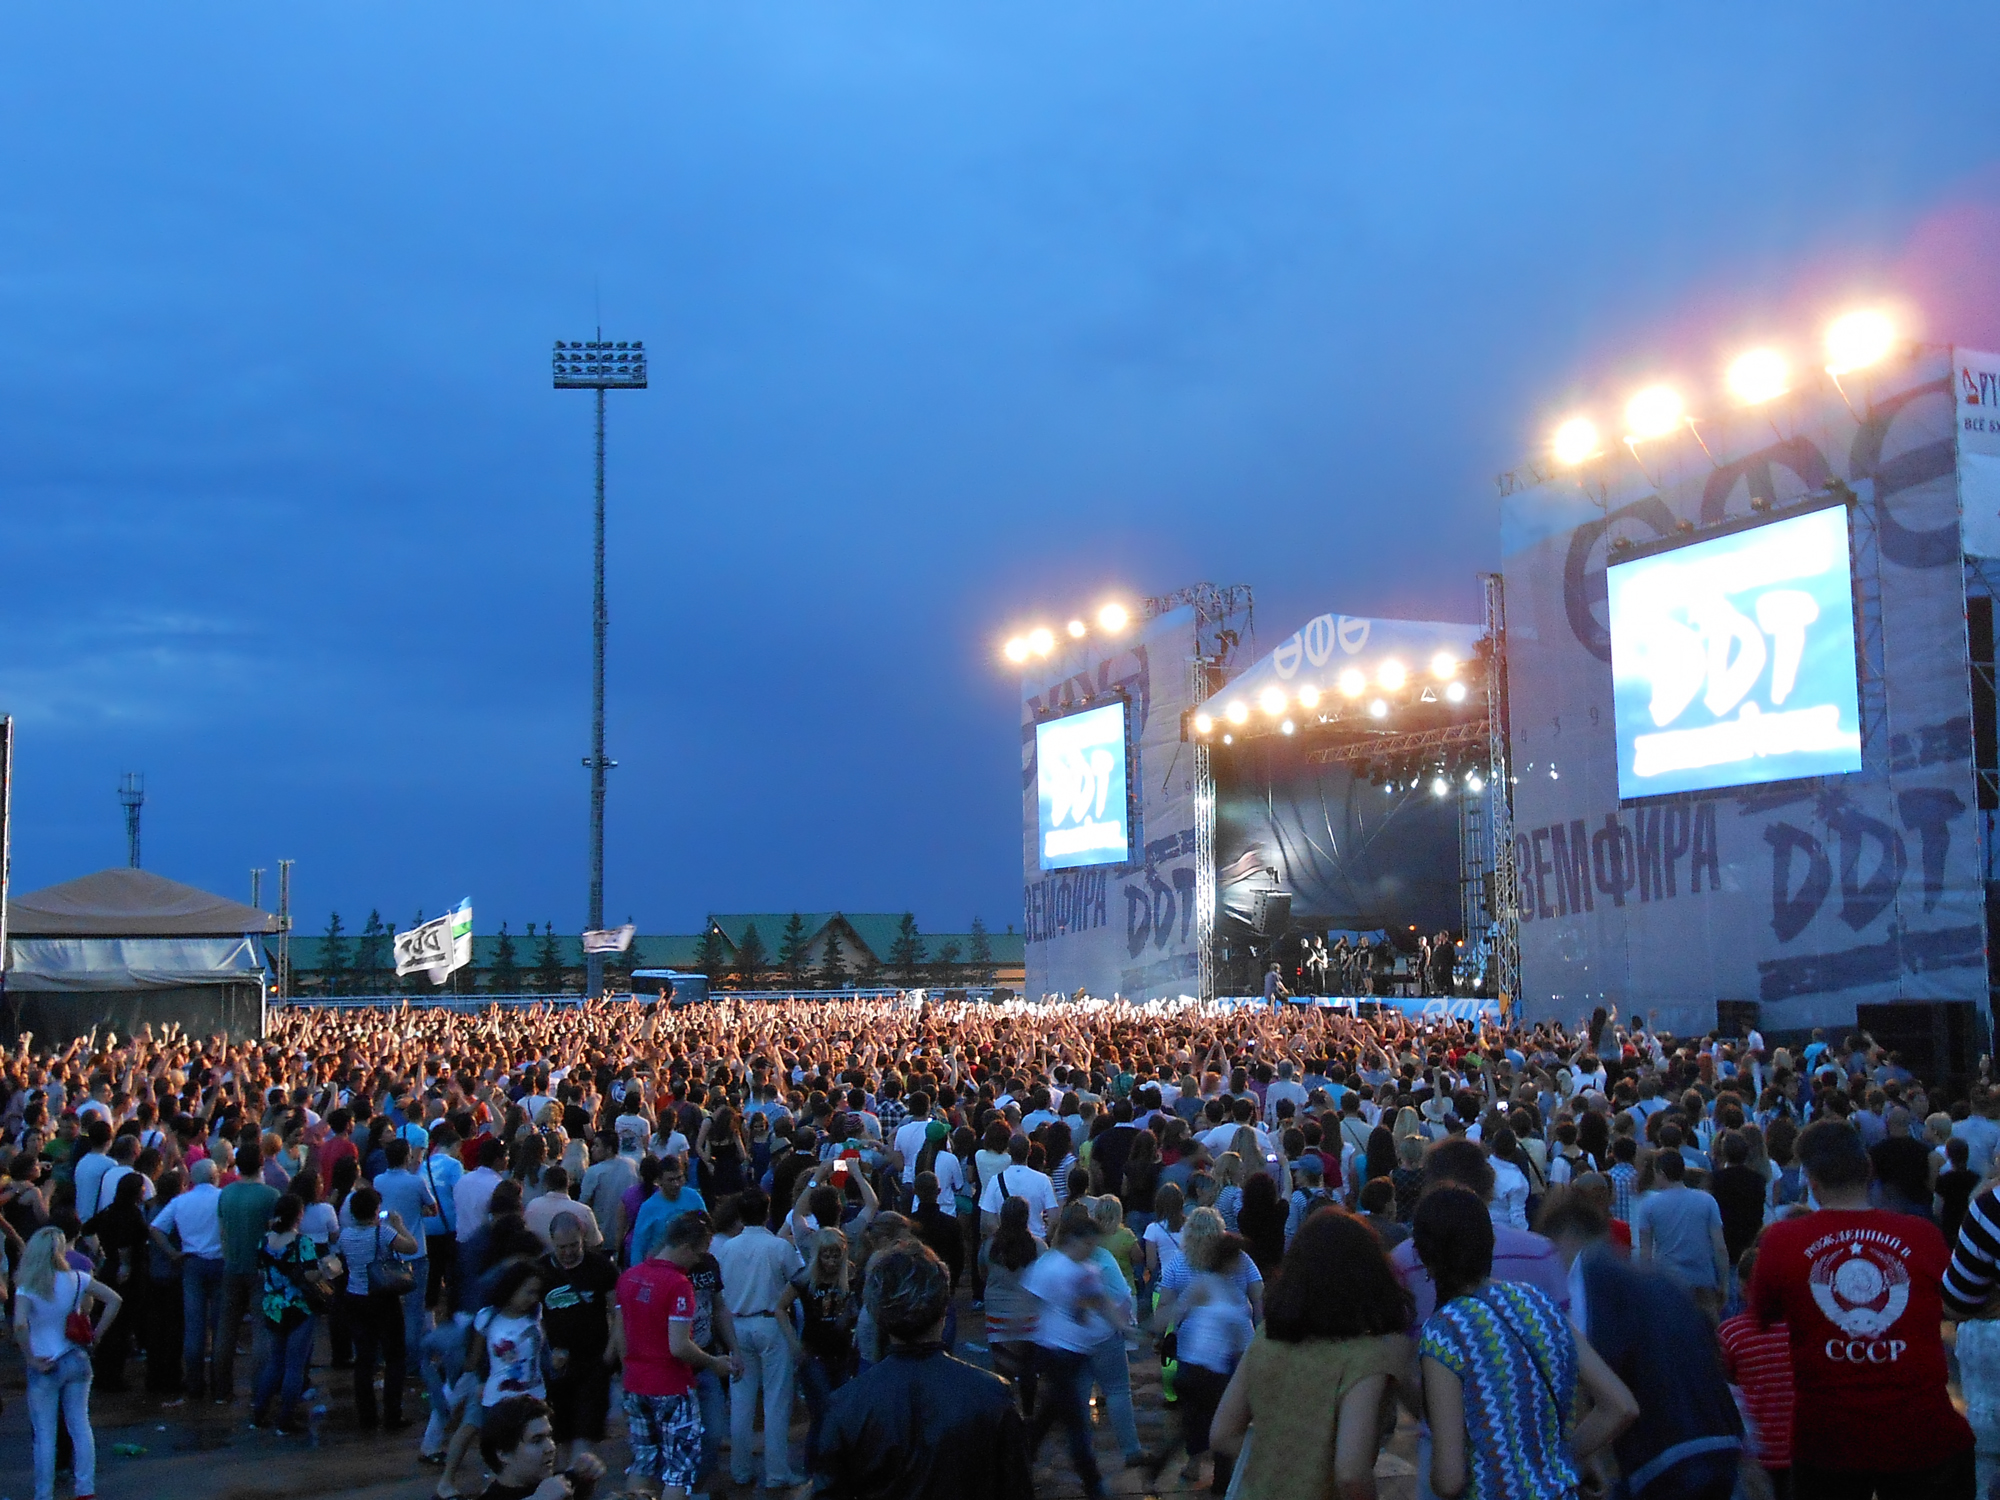 Concert crowd photo